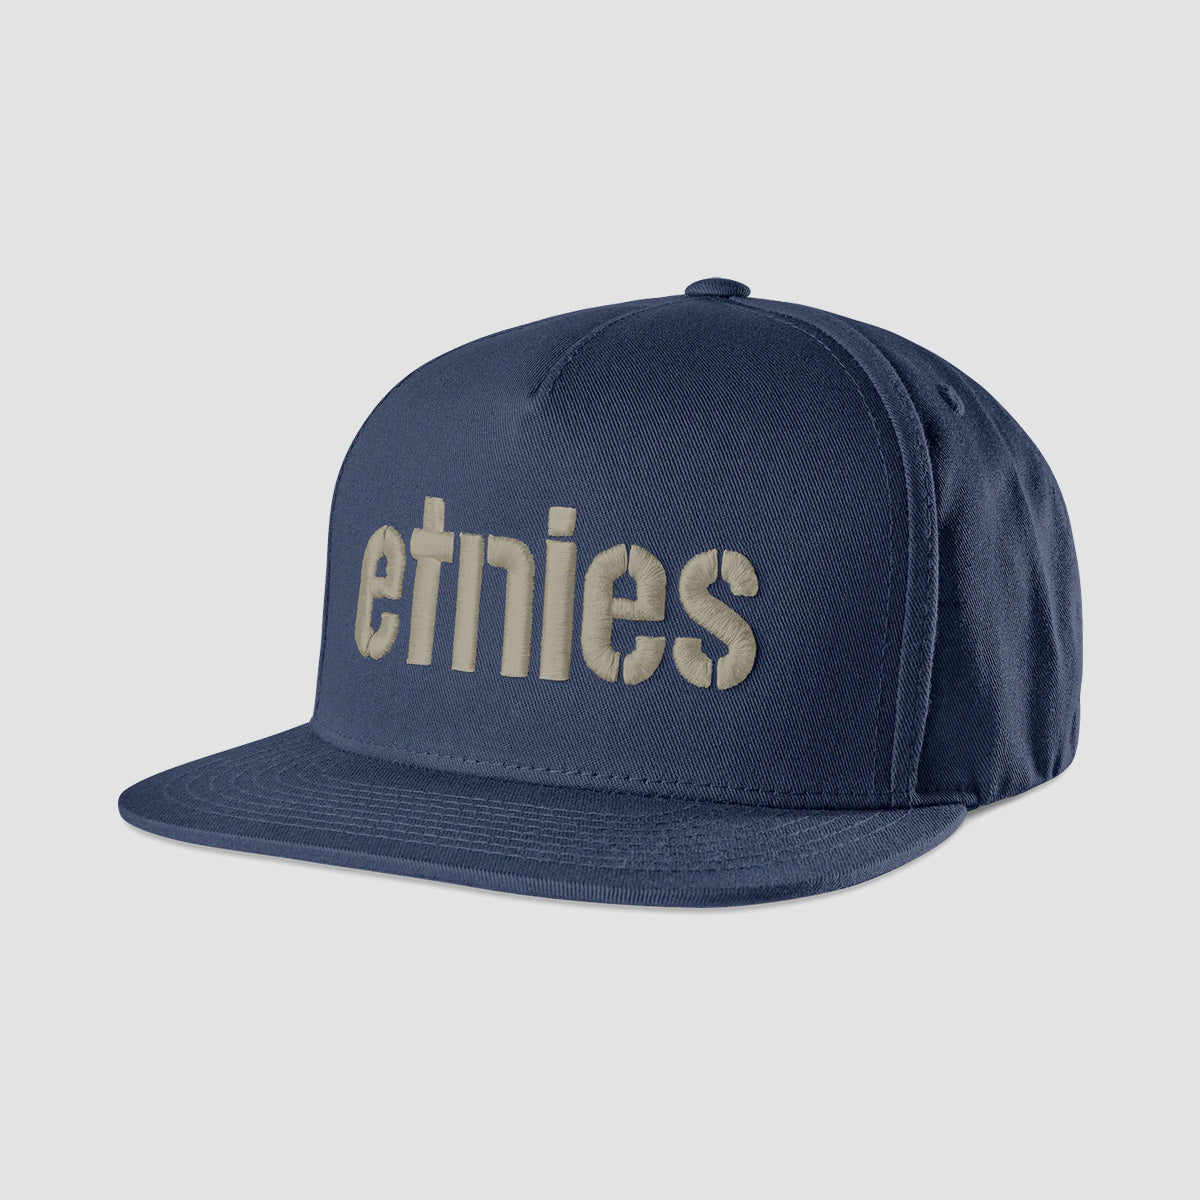 Etnies Corp Snapback Cap Navy/Tan